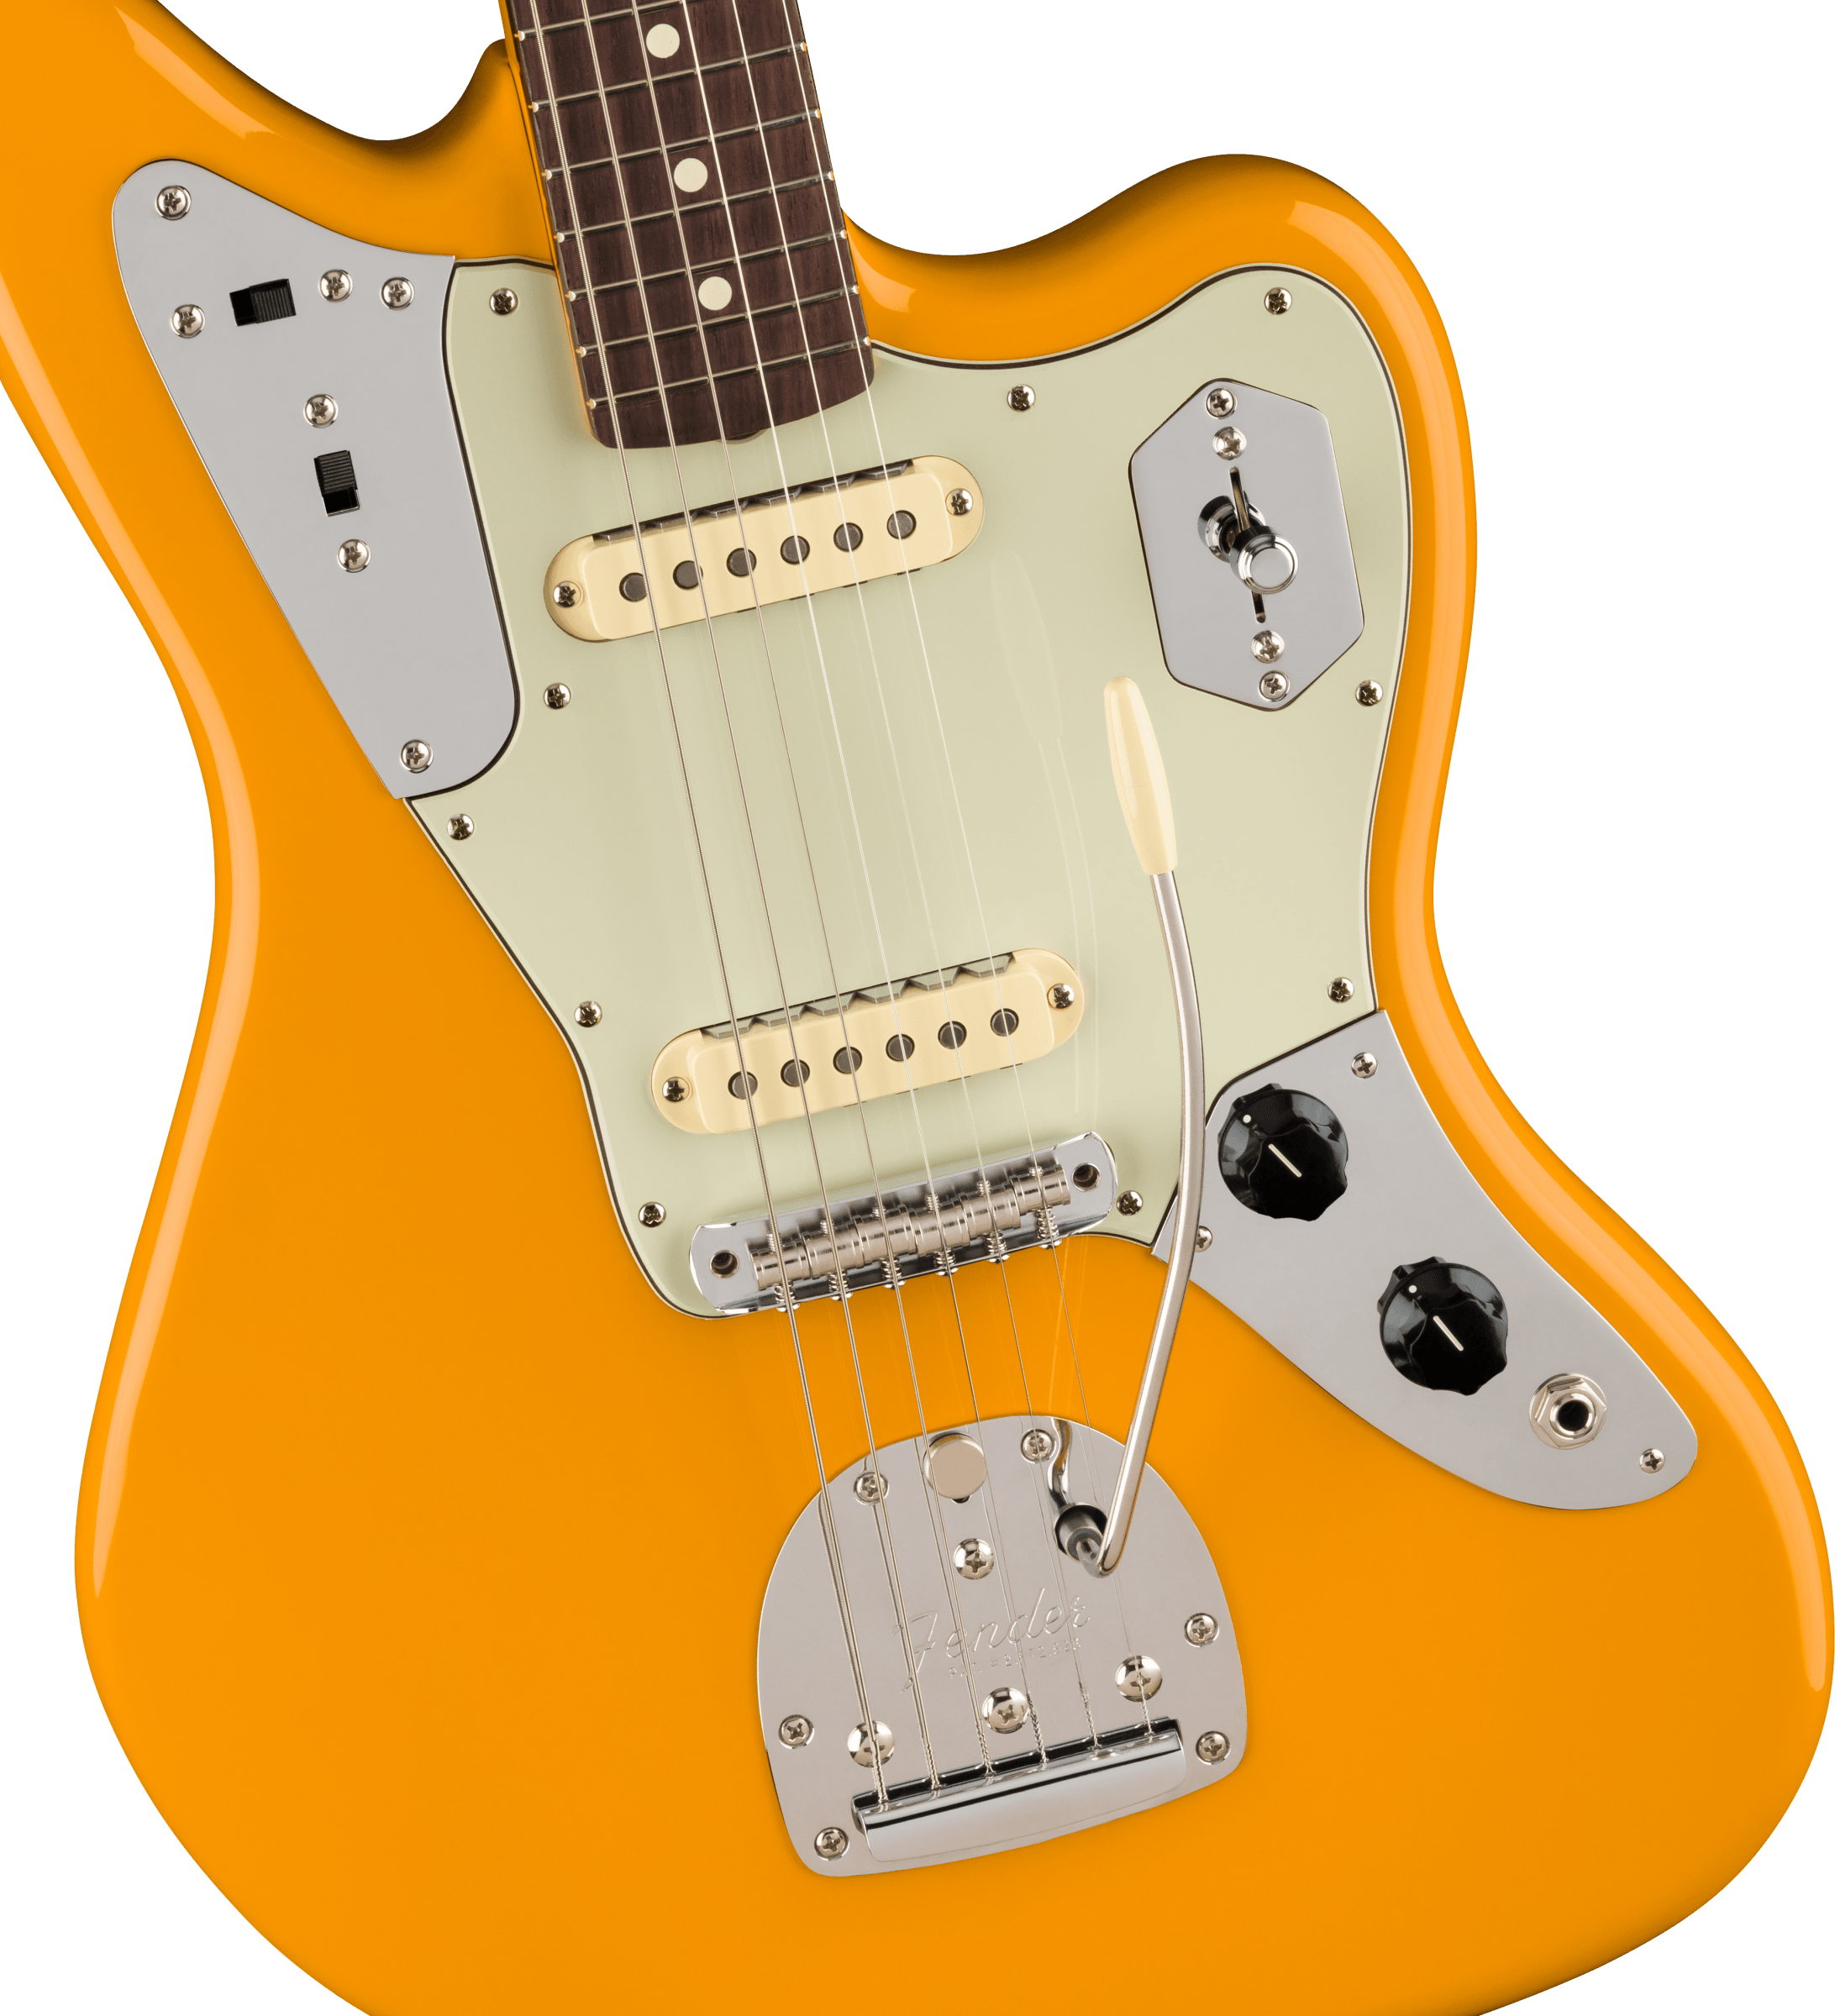 Fender Jaguar Johnny Marr Signature 2s Trem Rw - Fever Dream Yellow - Guitarra electrica retro rock - Variation 2